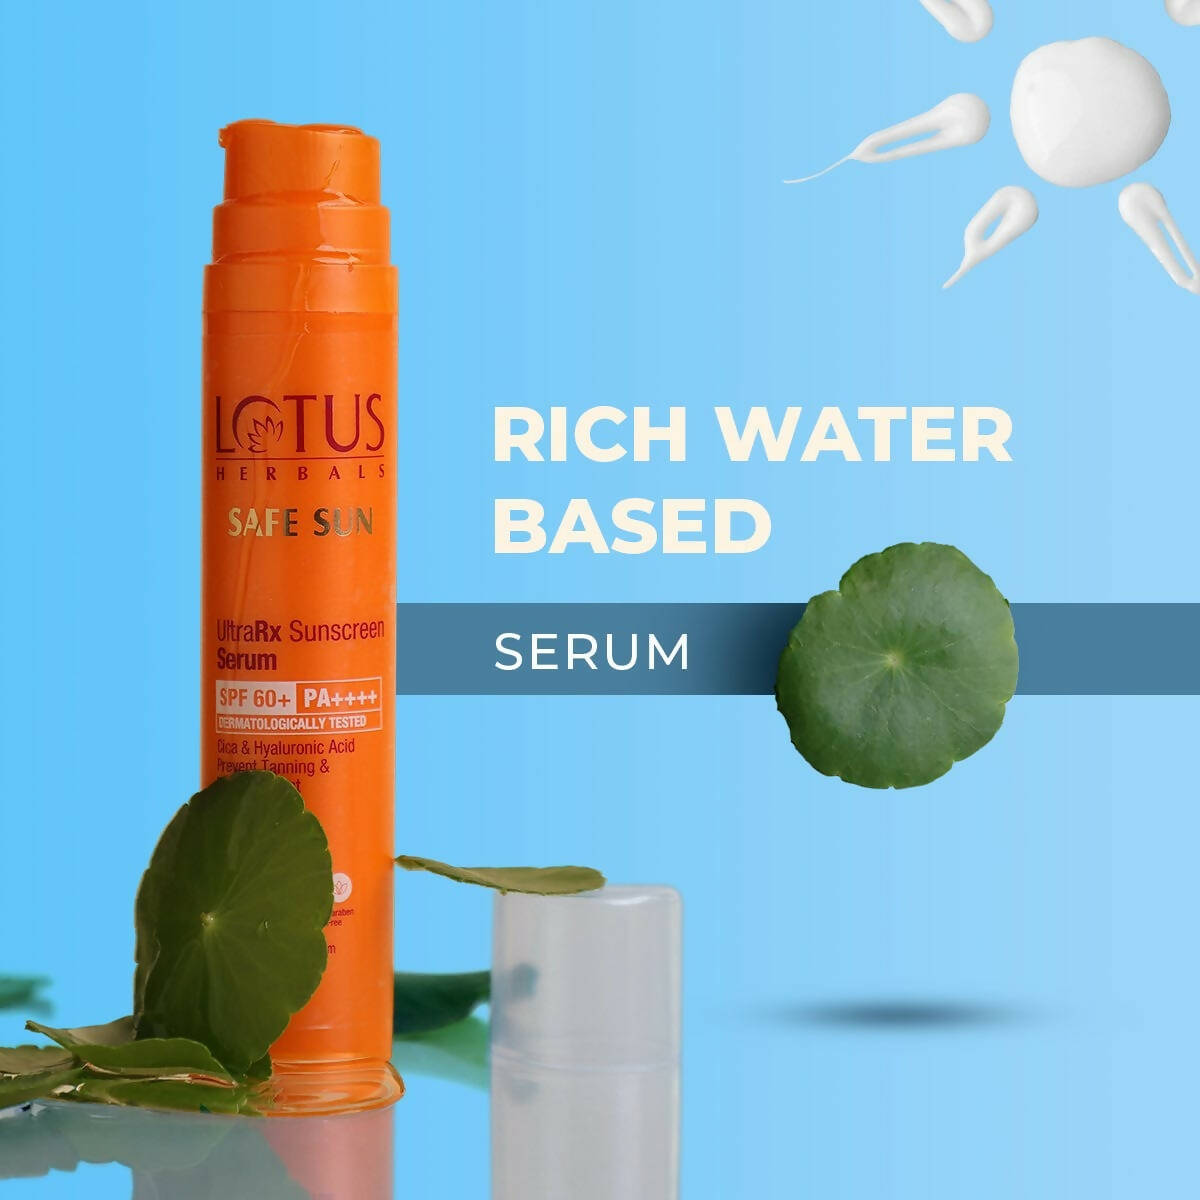 Lotus Herbals Safesun UltraRX Sunscreen Serum SPF 60 PA++++